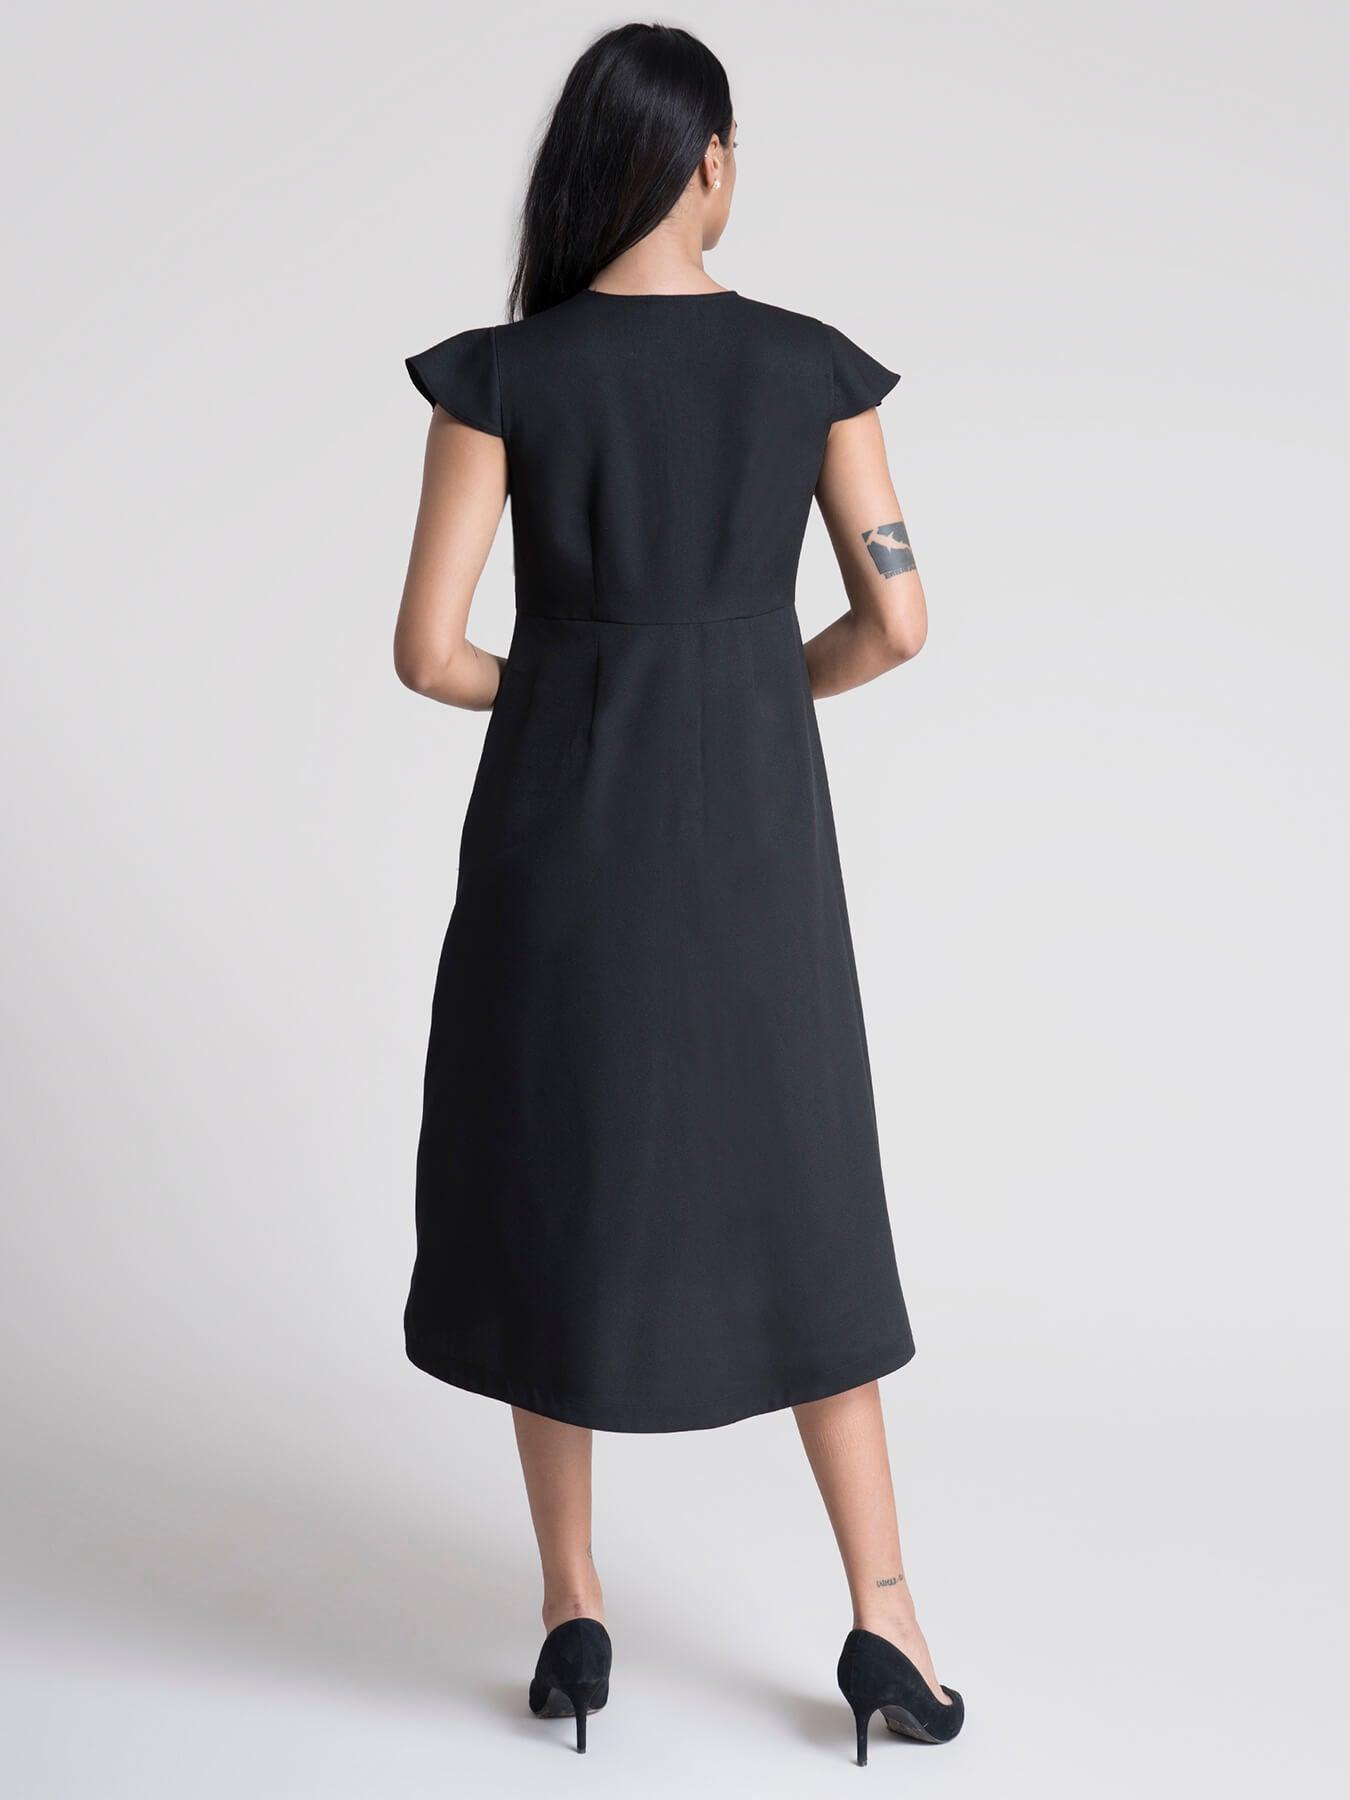 Round Neck A line Dress - Black| Formal Dresses